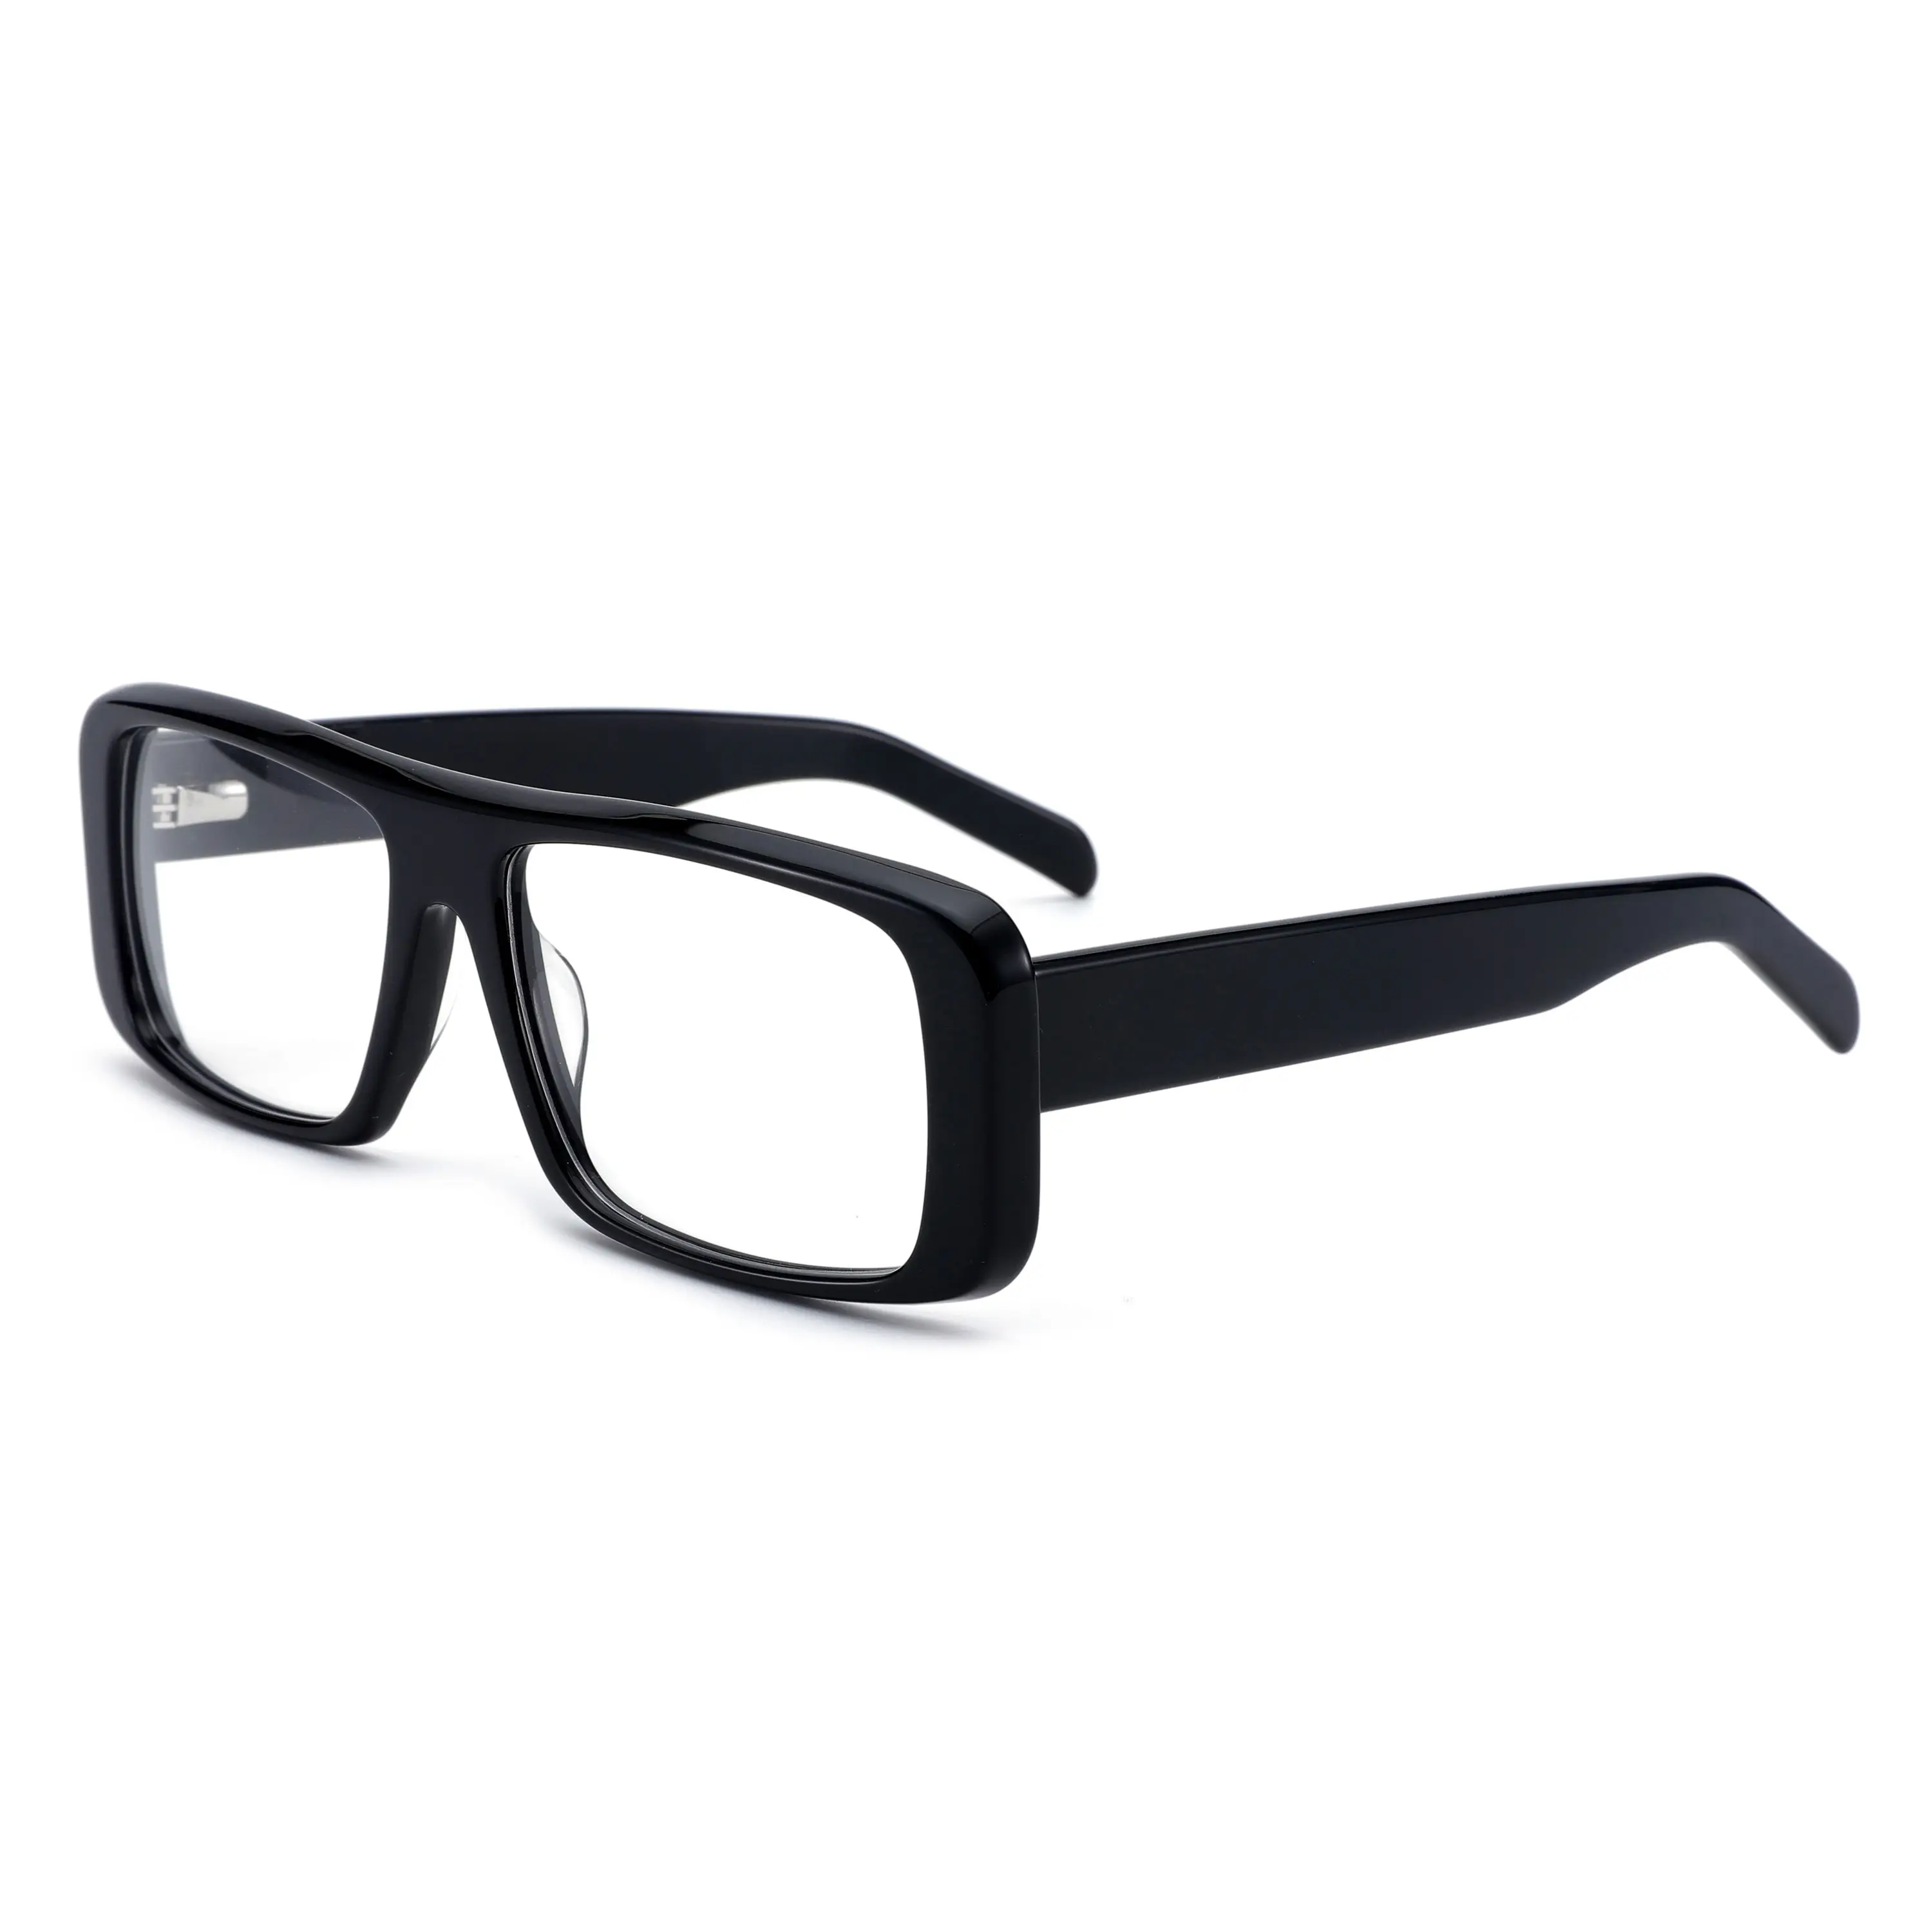 Gafas de moda coloridas, gafas de bloqueo de luz azul, marco de cristal, Marco óptico, gafas cuadradas de acetato, marcos de gafas